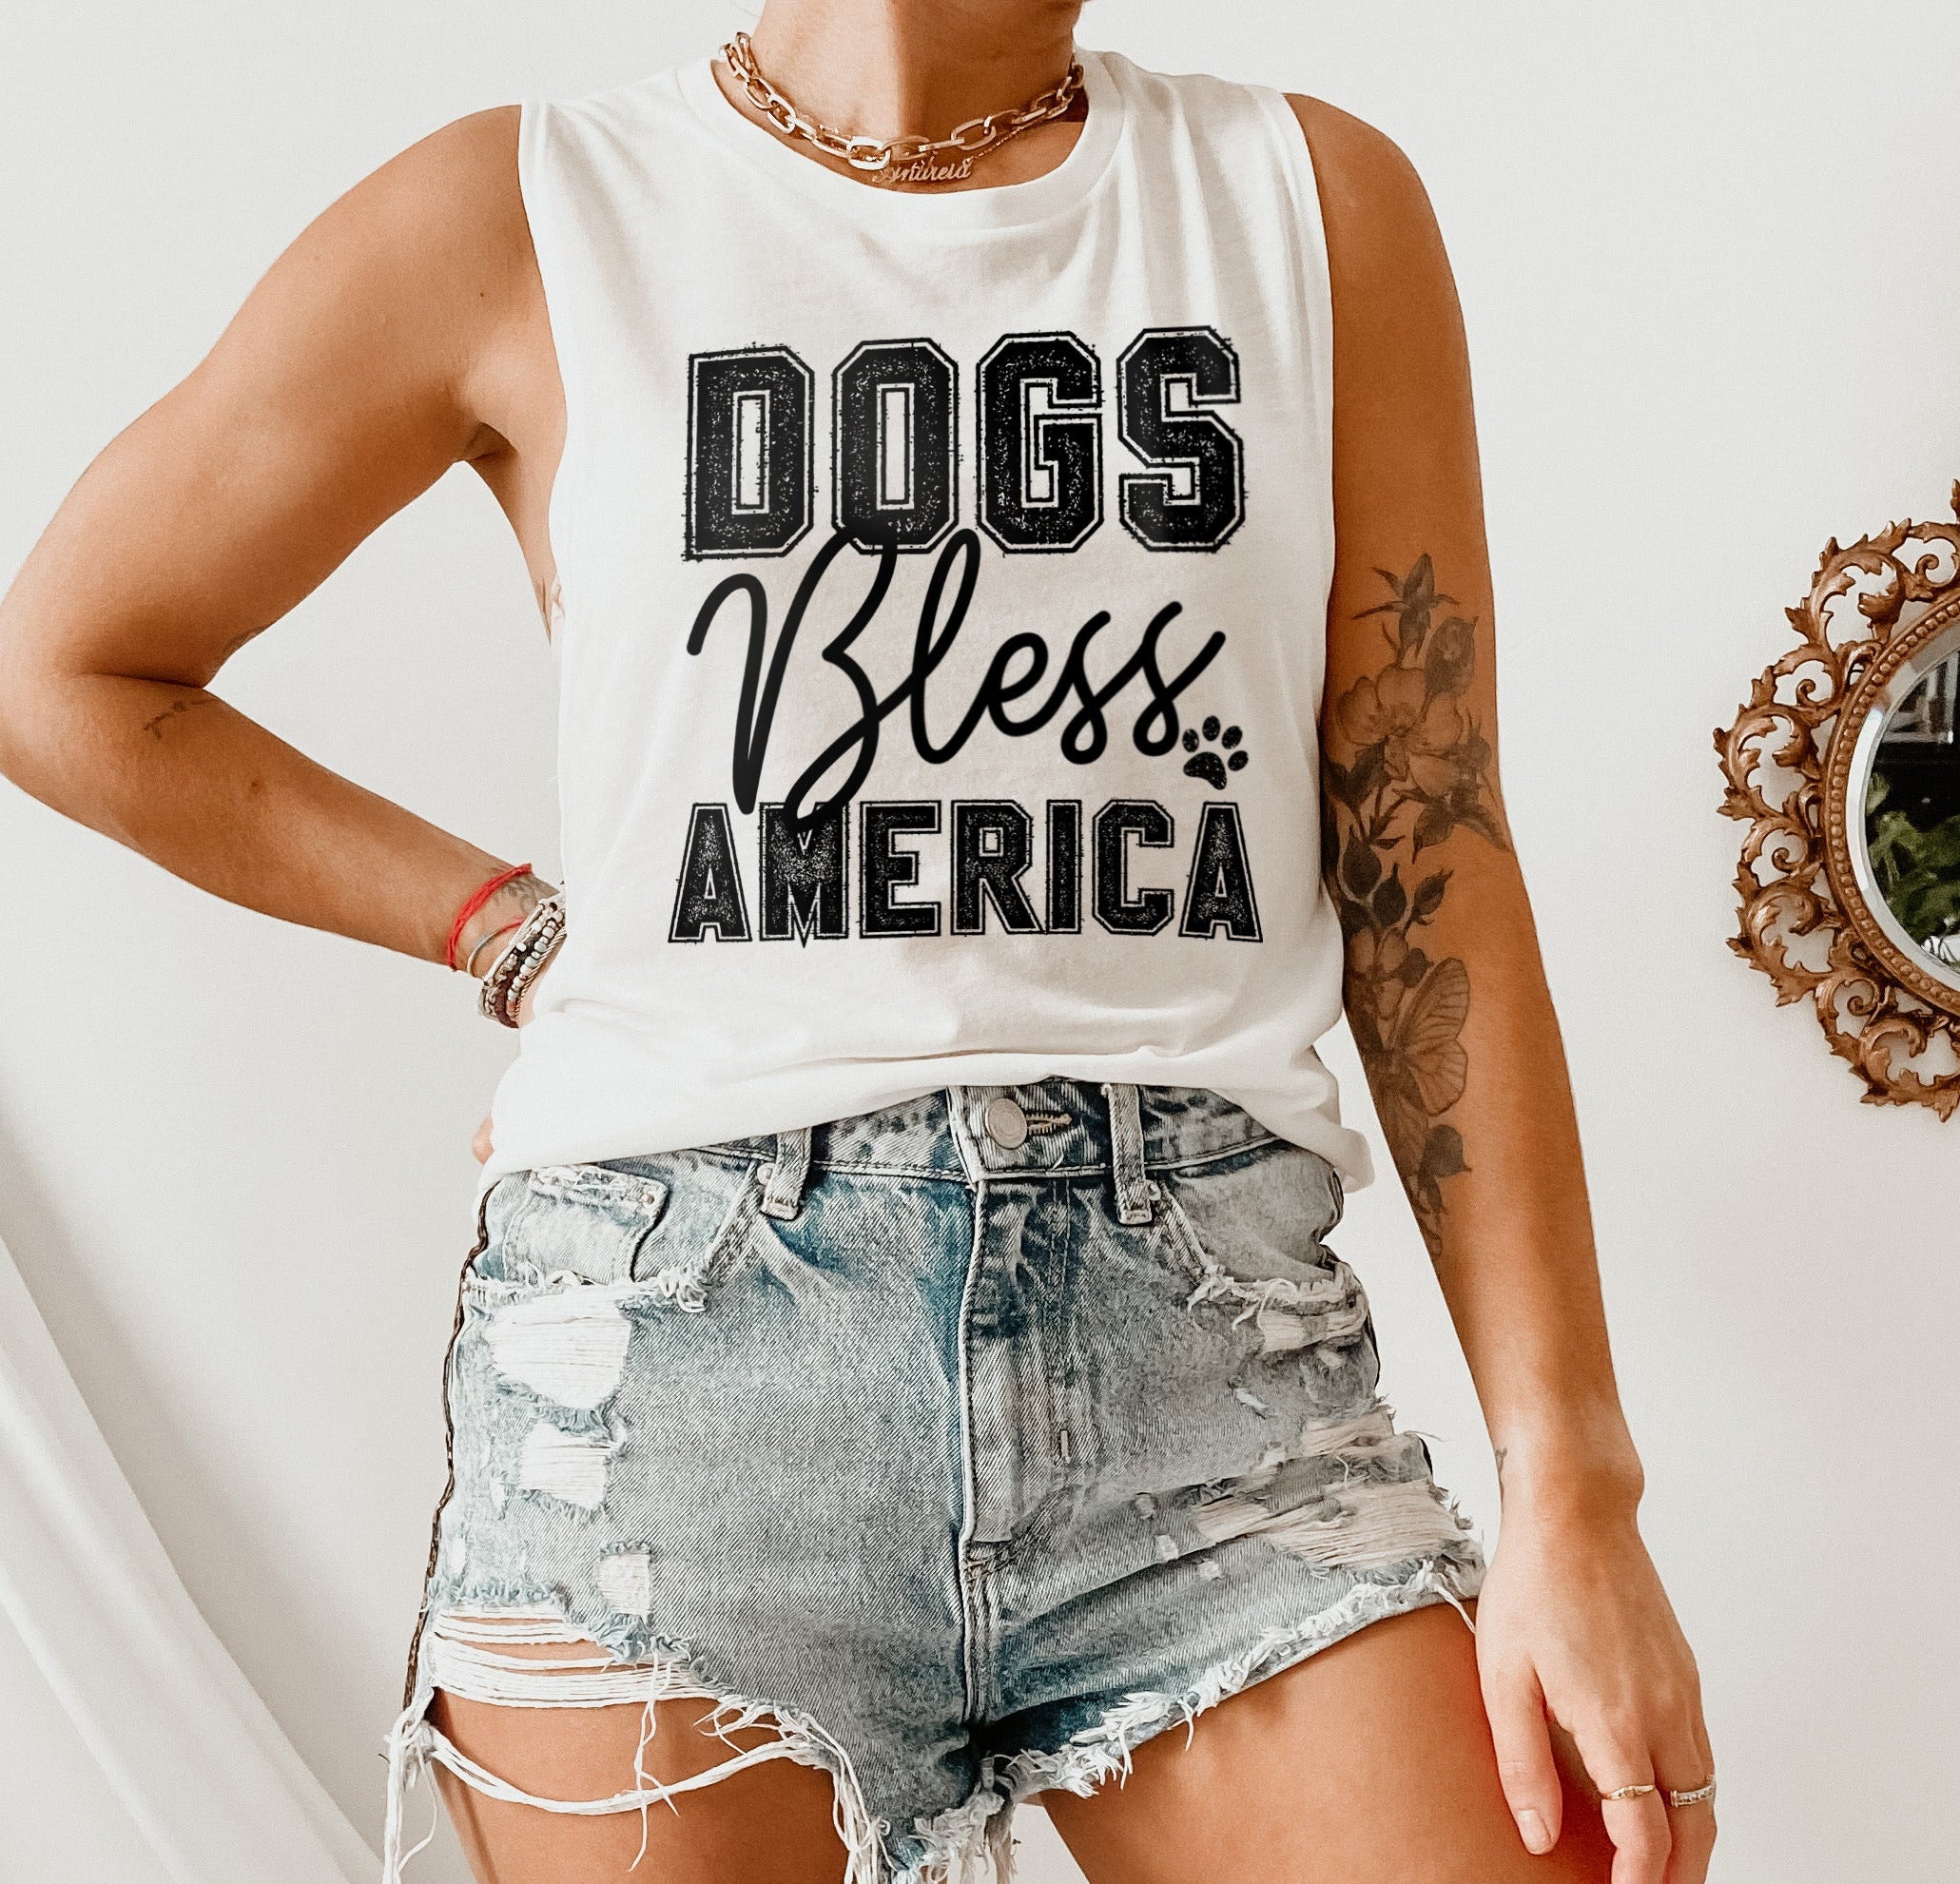 White muscle tank saying dogs bless america - HighCiti